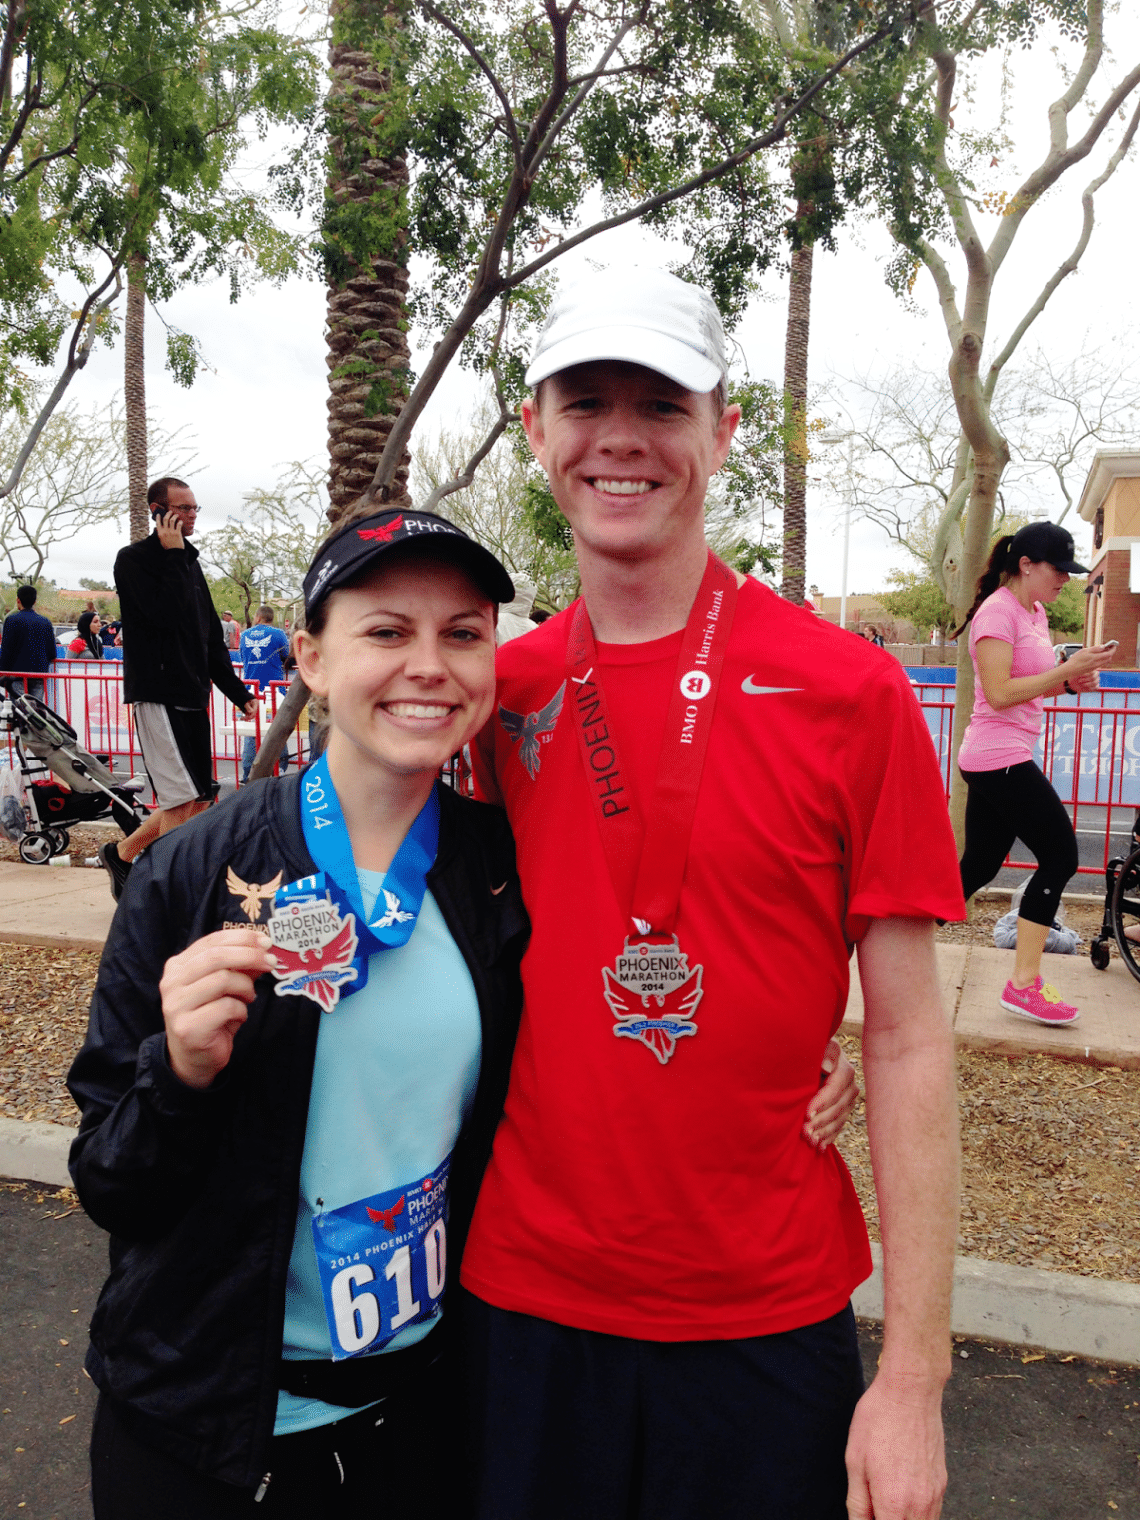 Doing a half marathon with your husband. 